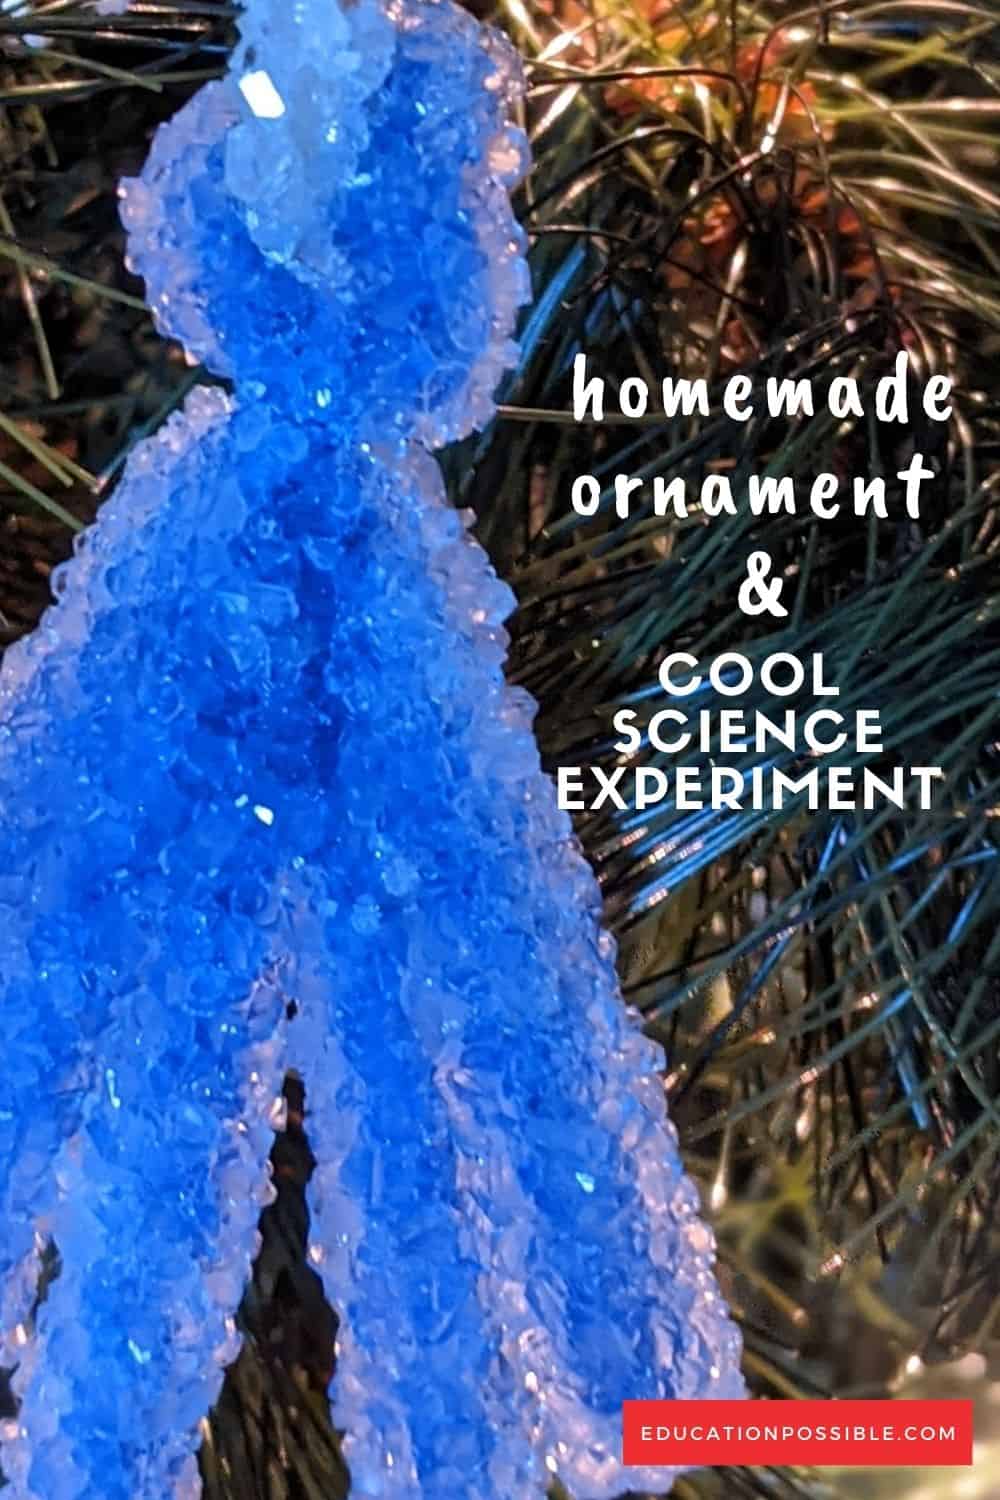 Blue borax crystal homemade ornament hanging on Christmas tree.